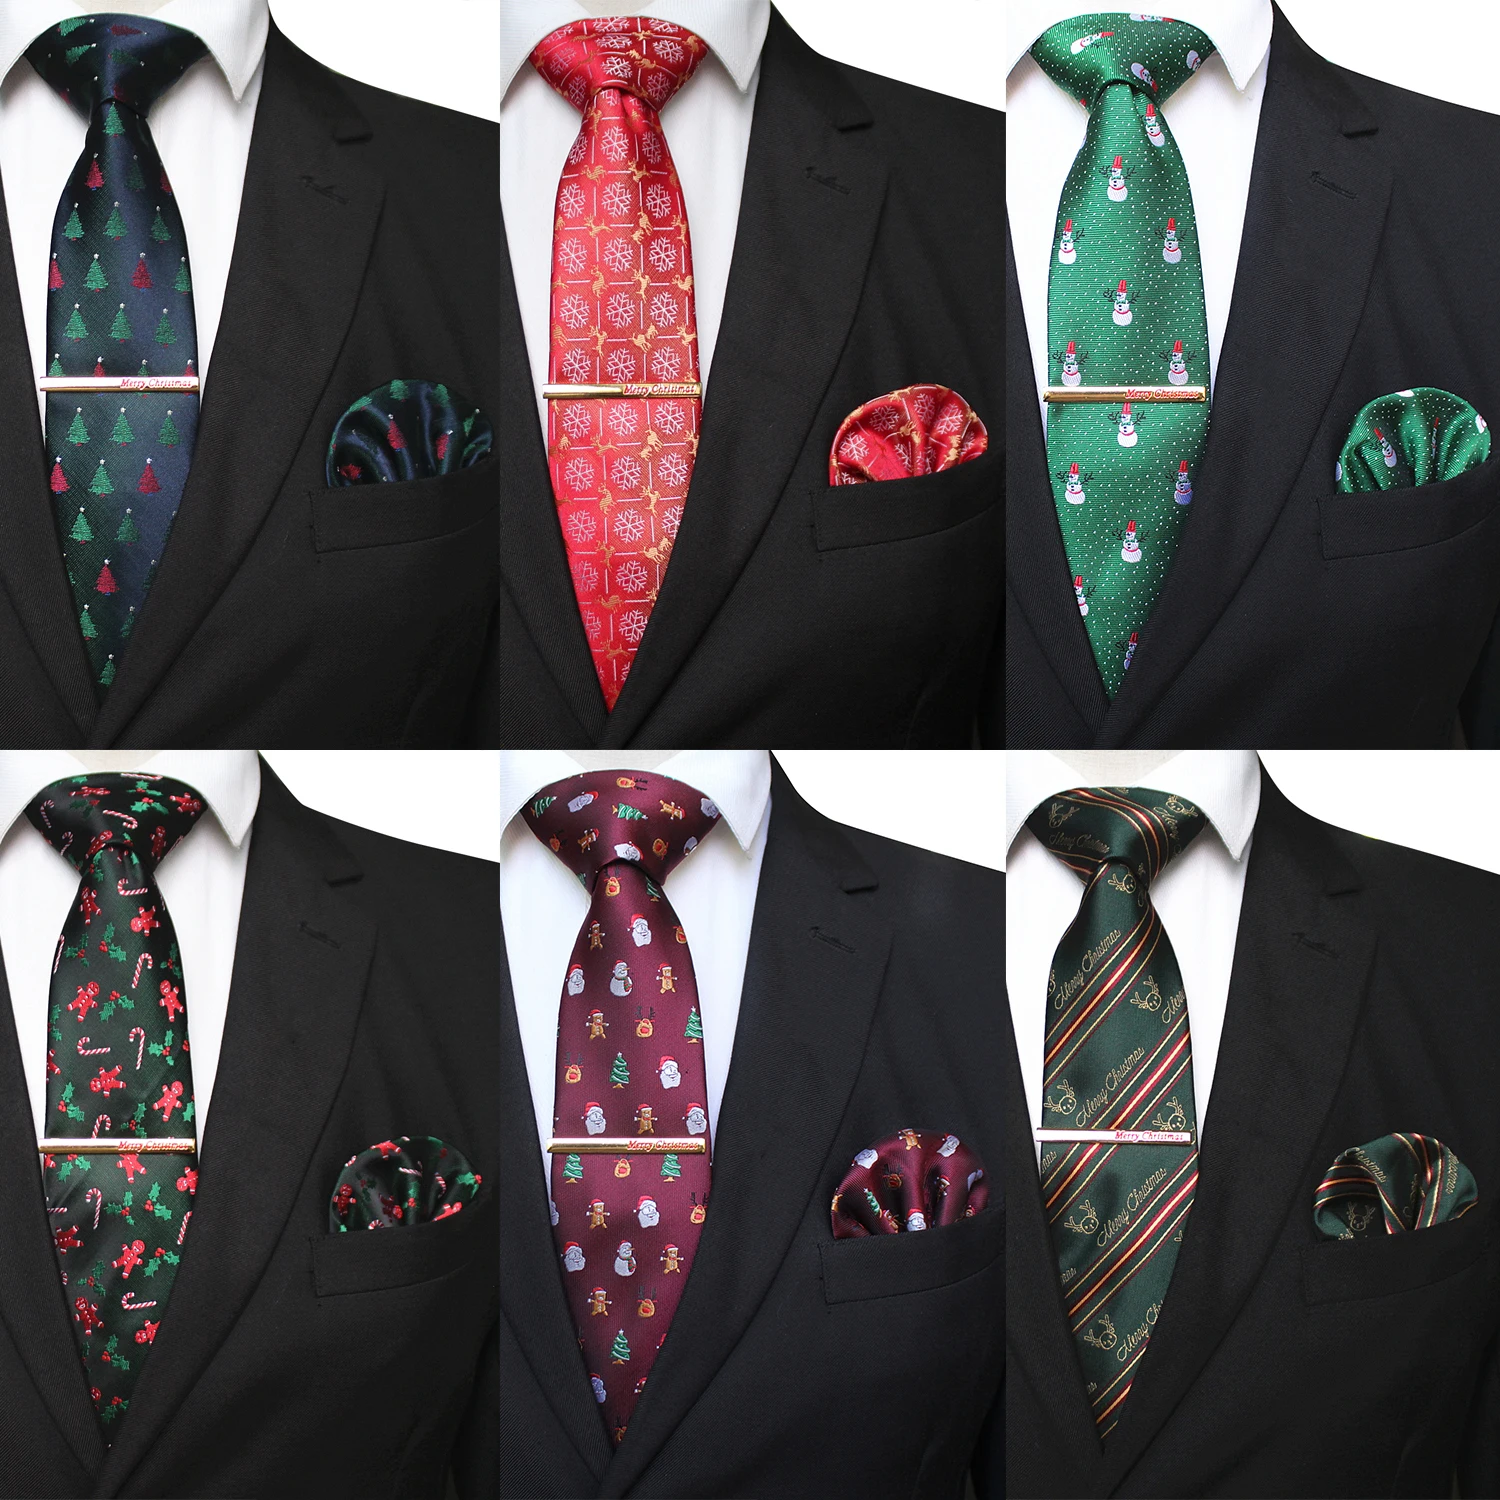 

EASTEPIC 8 cm Christmas Ties for Men Tie Set Quality Handkerchief Exquisite Clip Red Jacquard Necktie Men's Accessory Xmas Gift